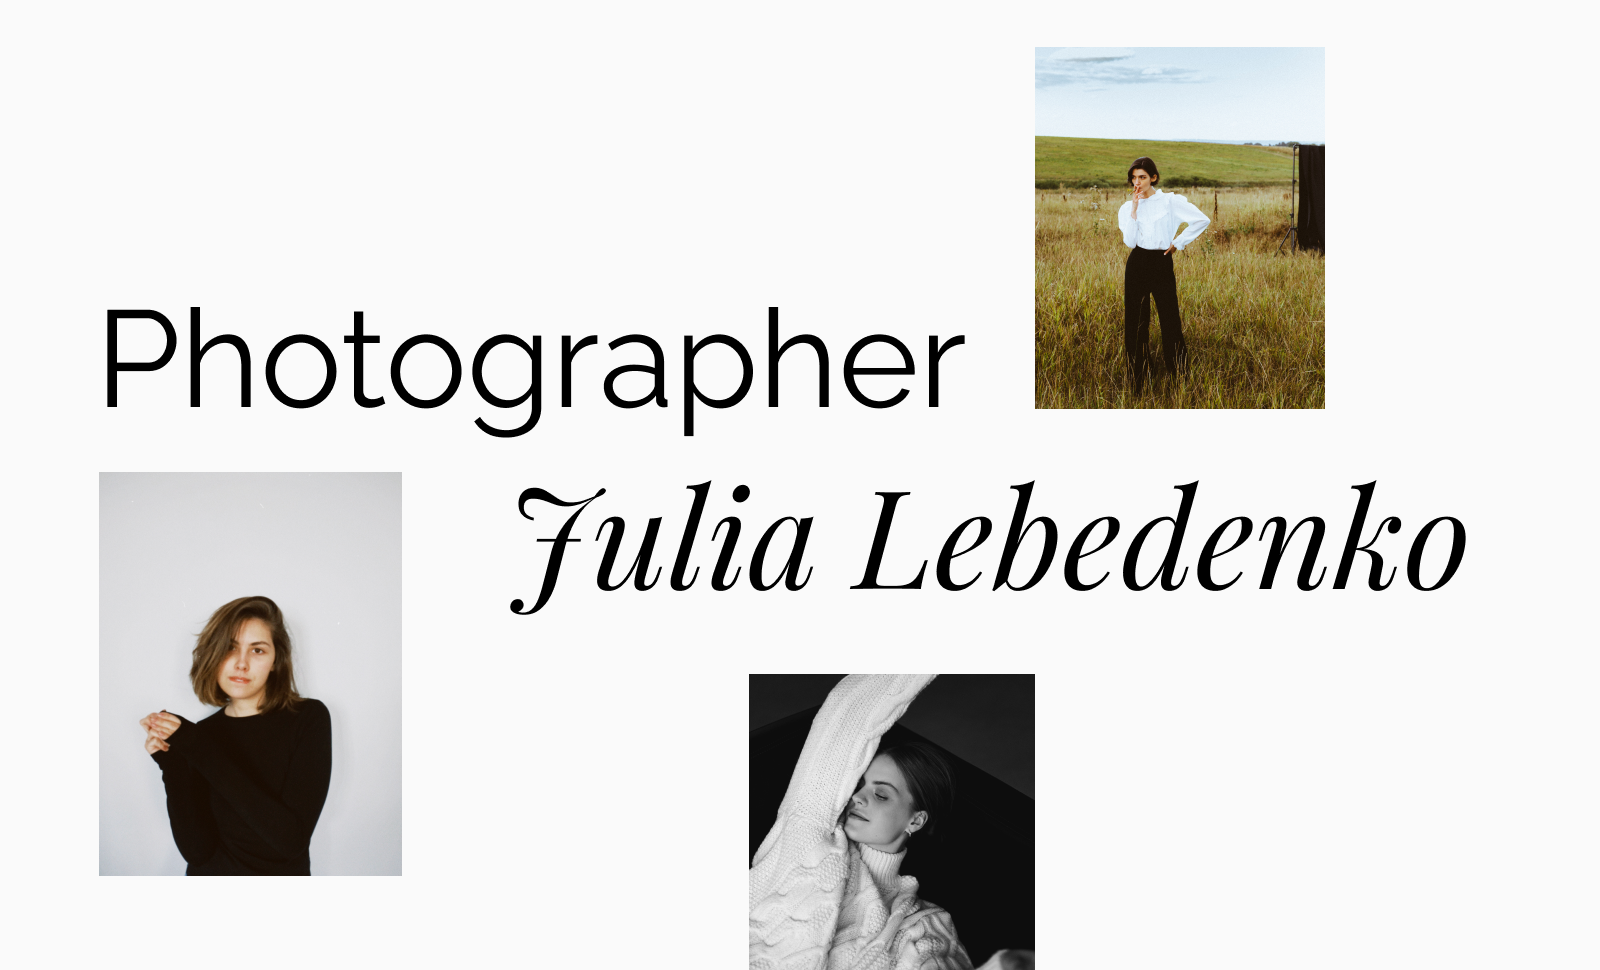 Photographer Julia Lebedenko